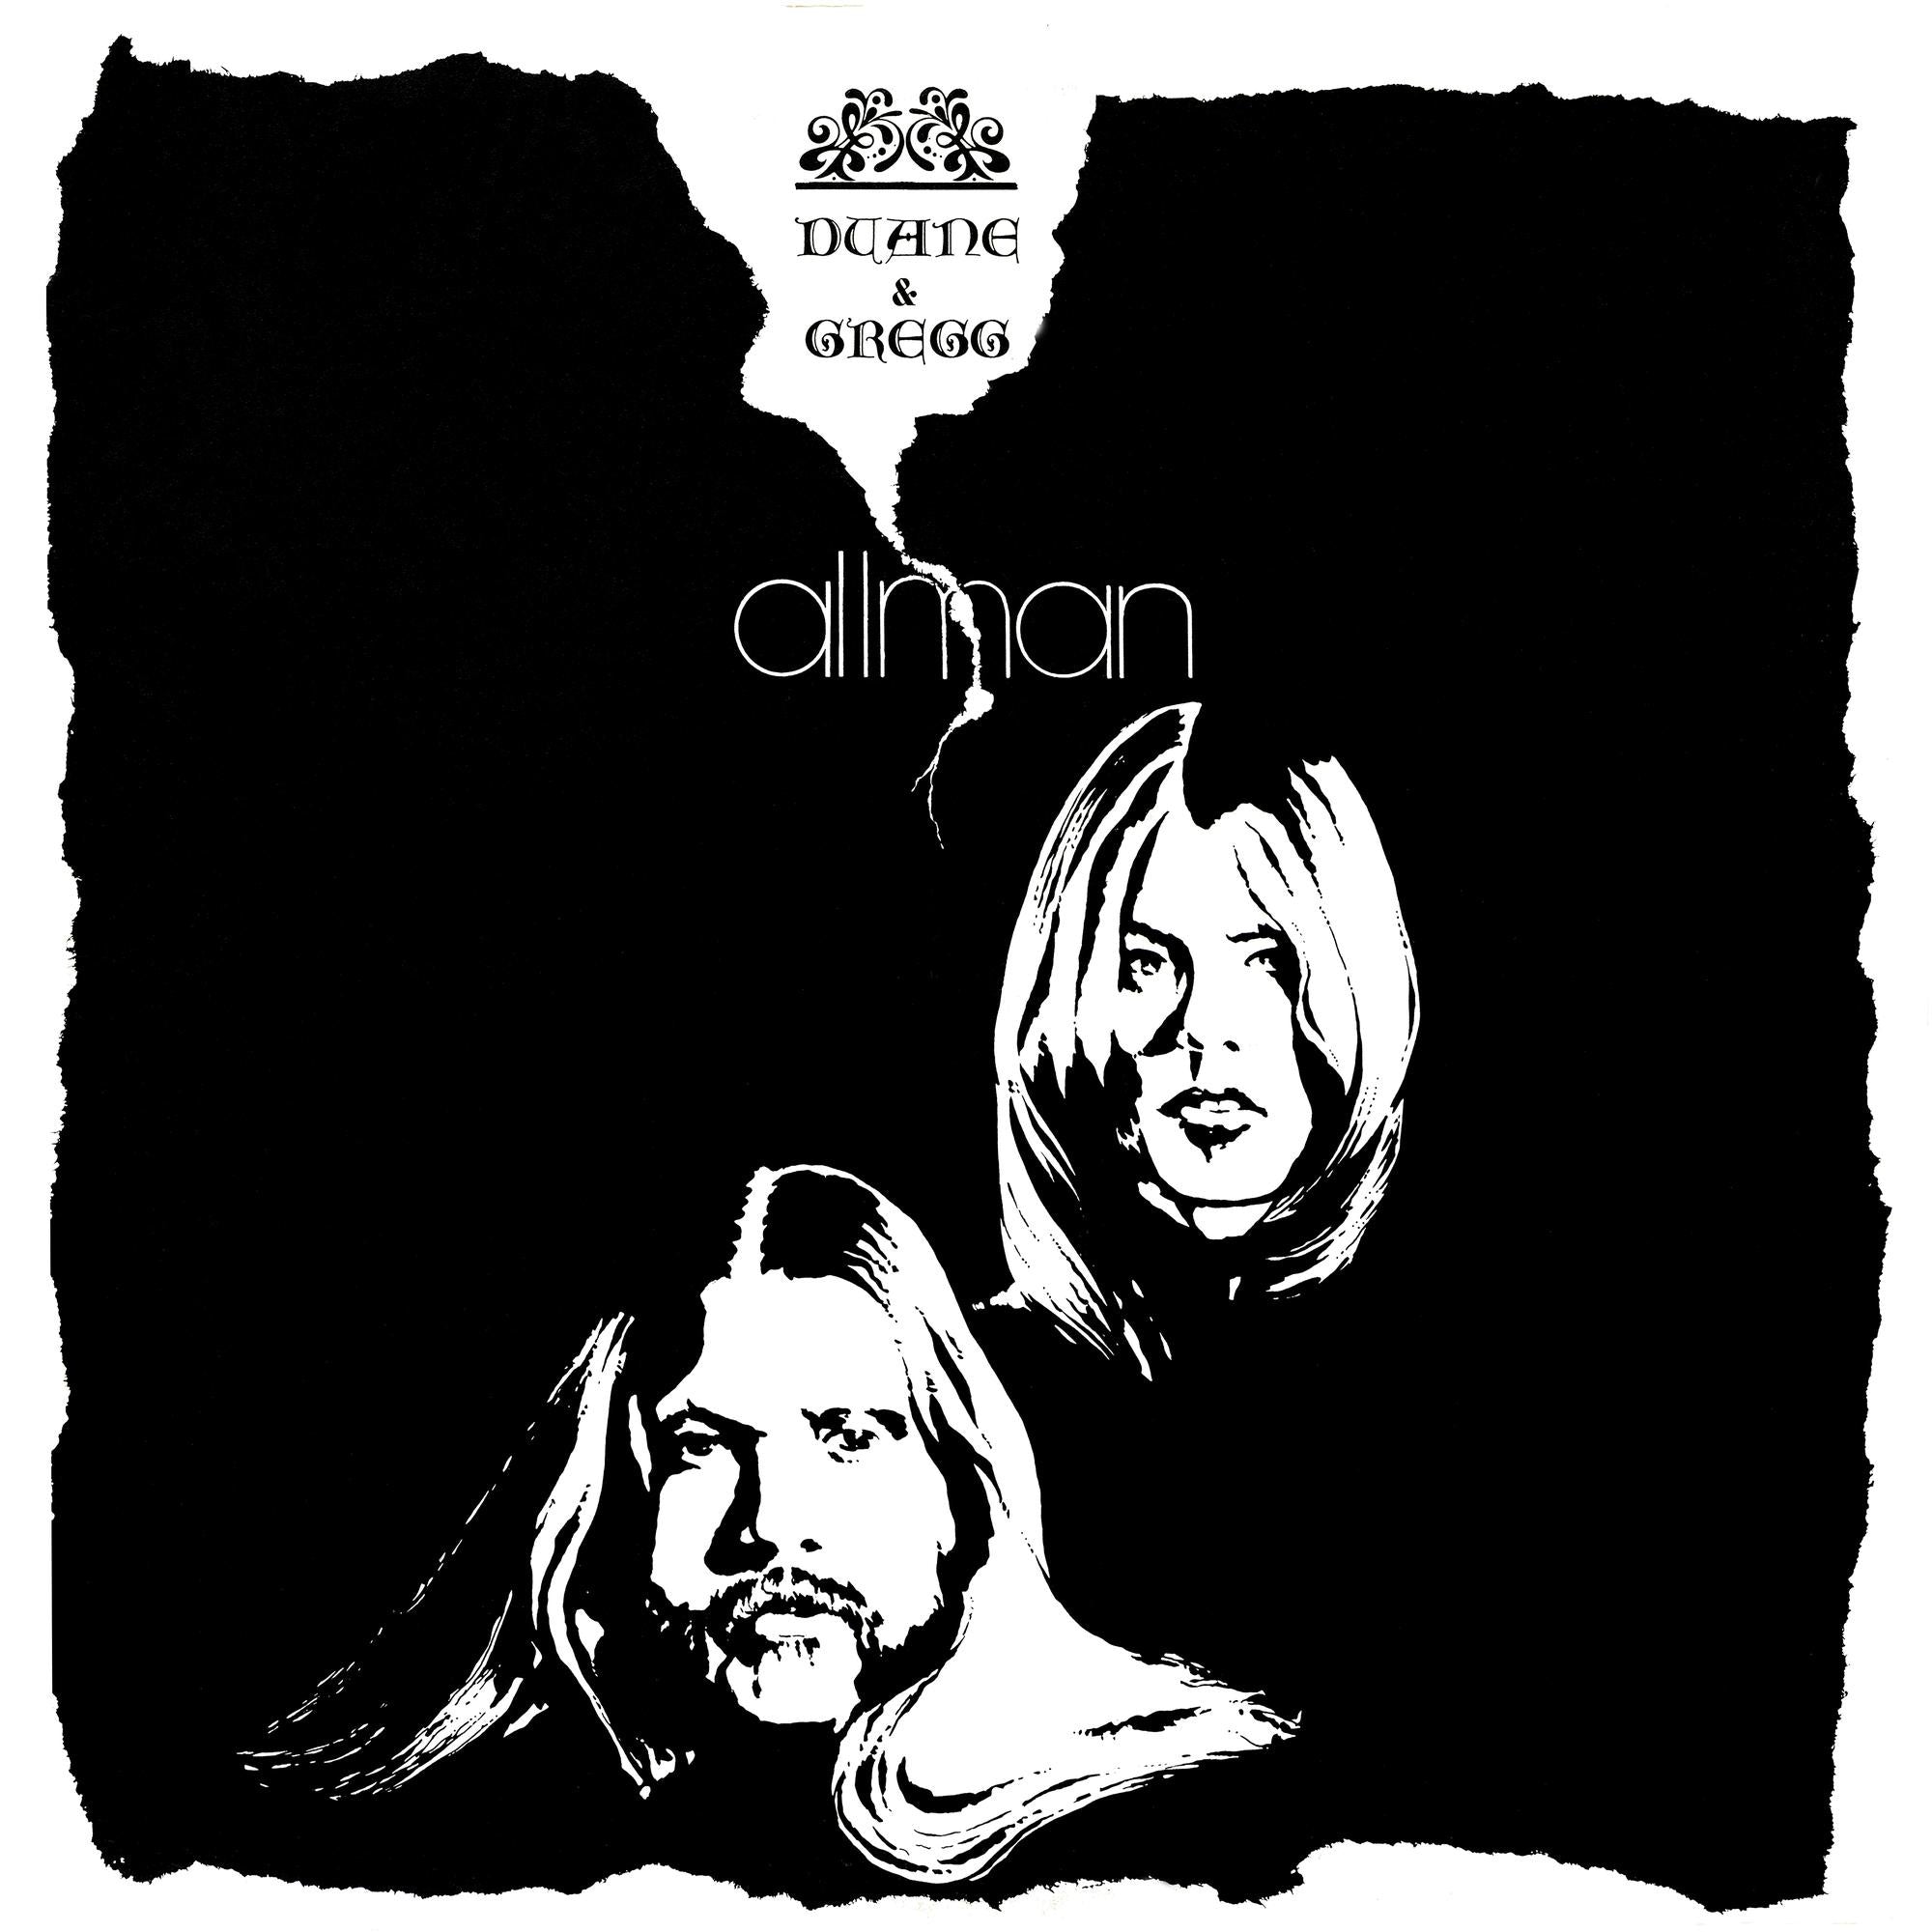 Duane & Gregg Allman ‎– S/T - New LP Record 2020 ABBRC USA Vinyl - Blues Rock